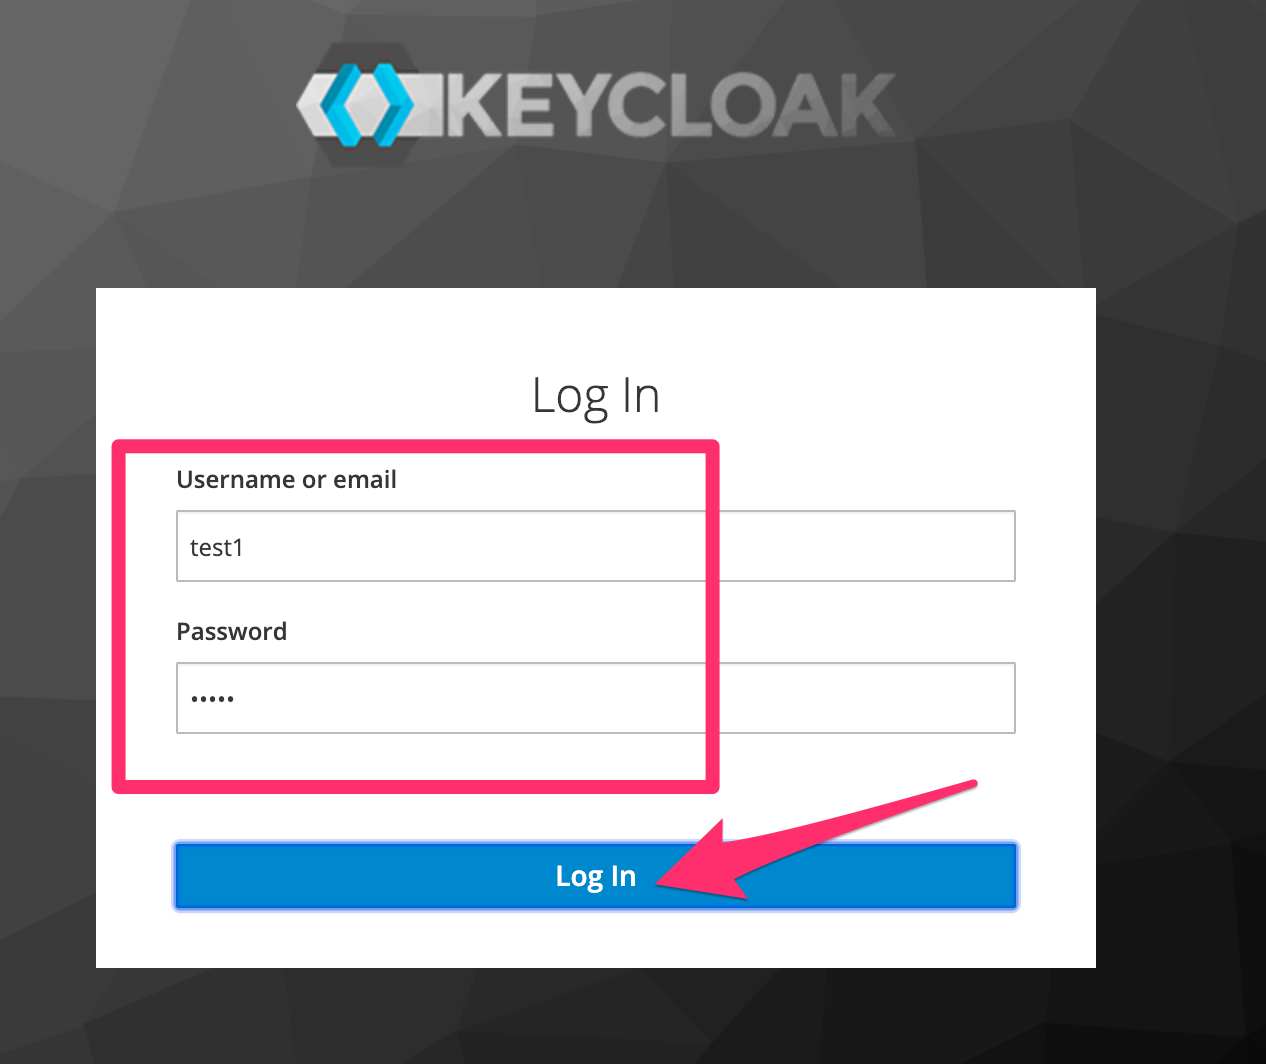 Log_in_to_Keycloak-3.png